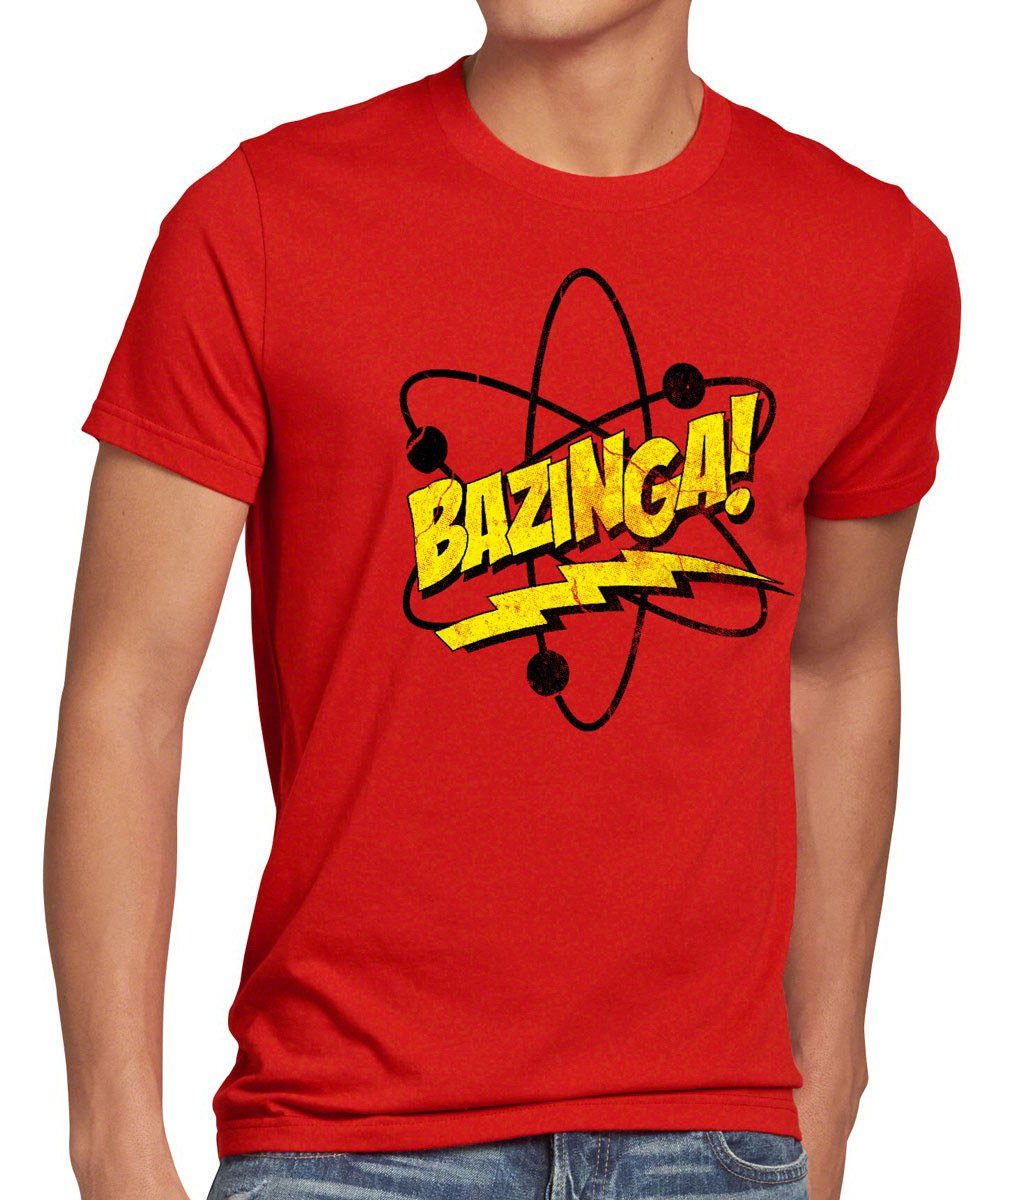 atom cooper leonard Herren rot the Sheldon physik bang fan T-Shirt style3 Bazinga Print-Shirt big theory